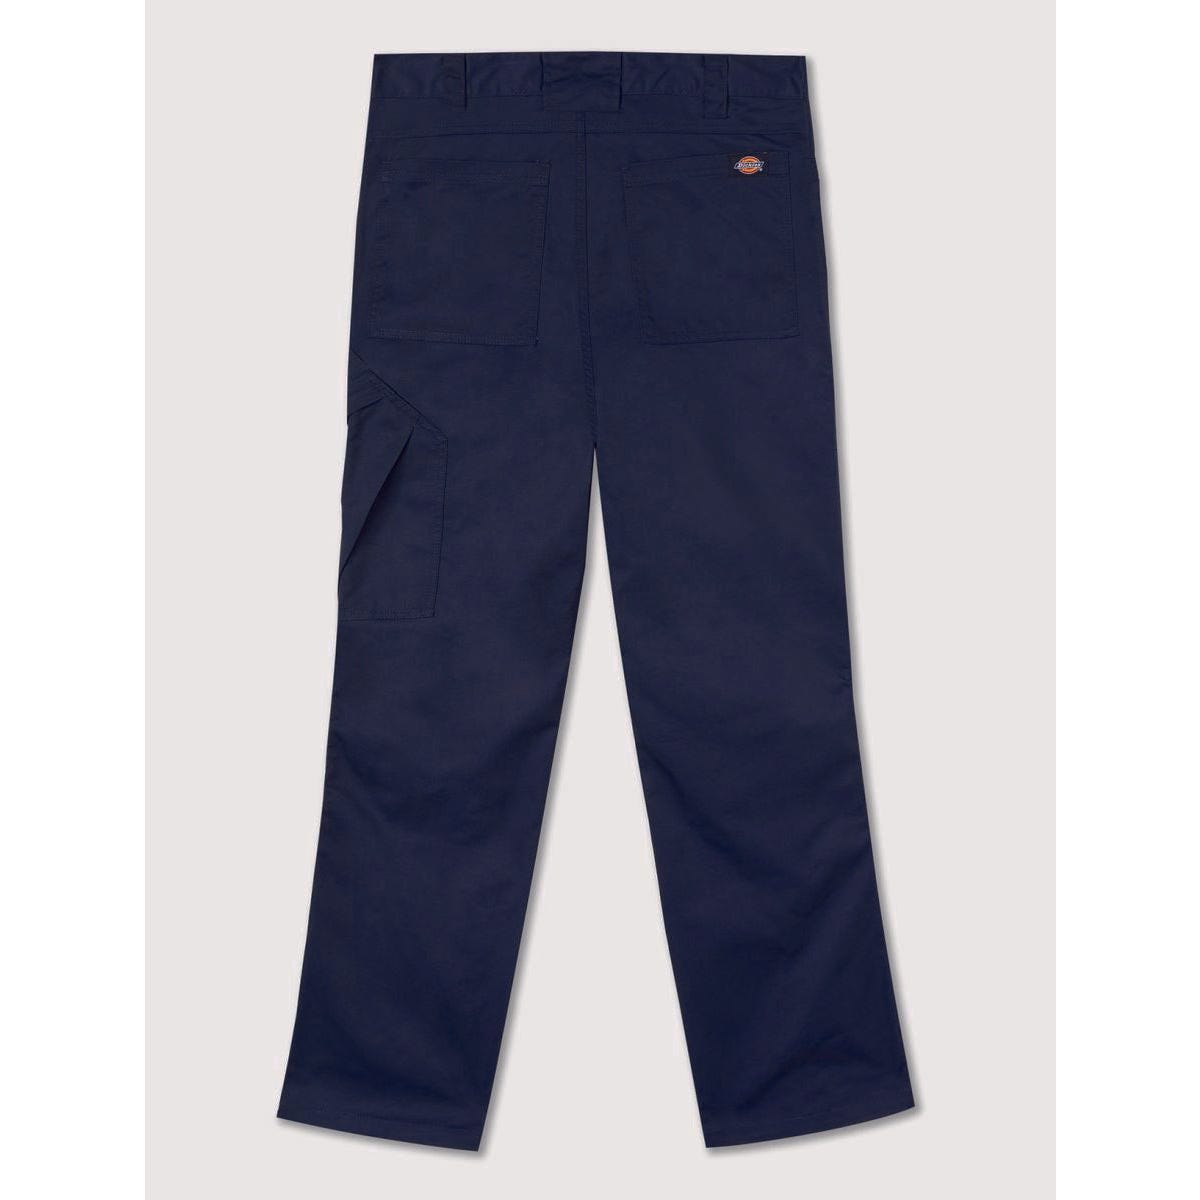 Pantalon de travail Action Flex bleu marine - Dickies - Taille 38 6